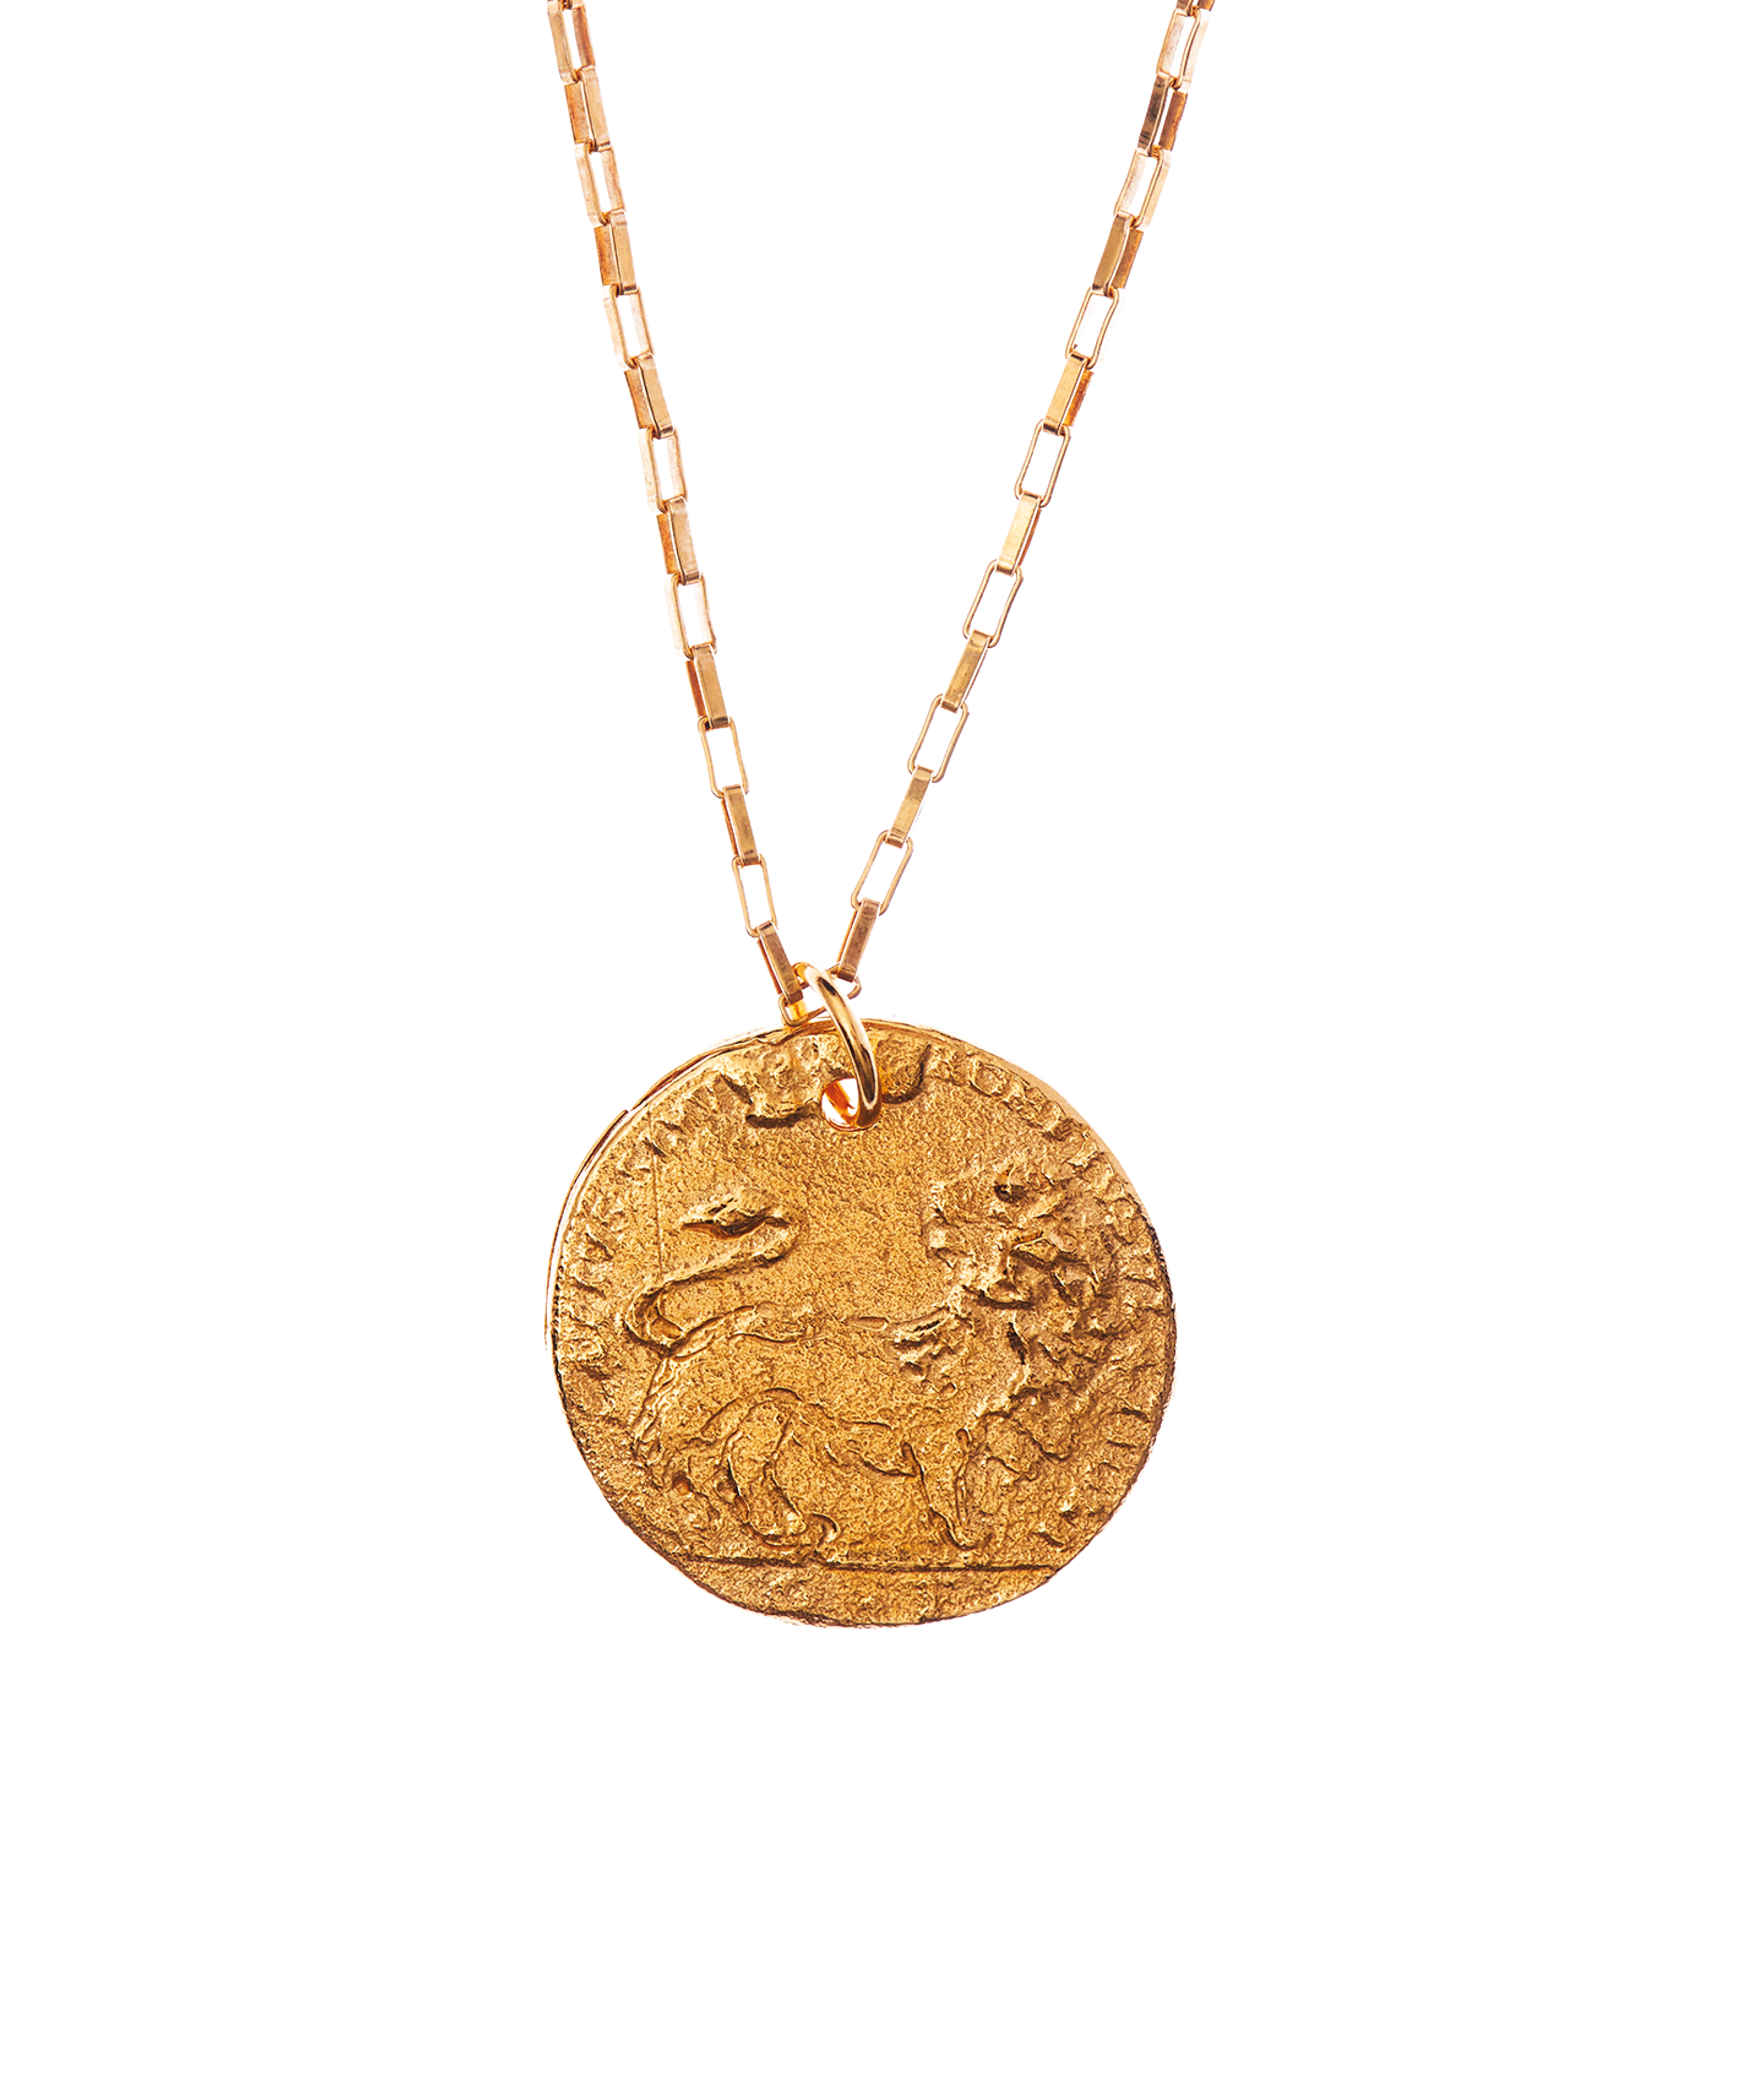 Medium Leone Box Chain Necklace | 24k Gold-Plated Coin | Alighieri